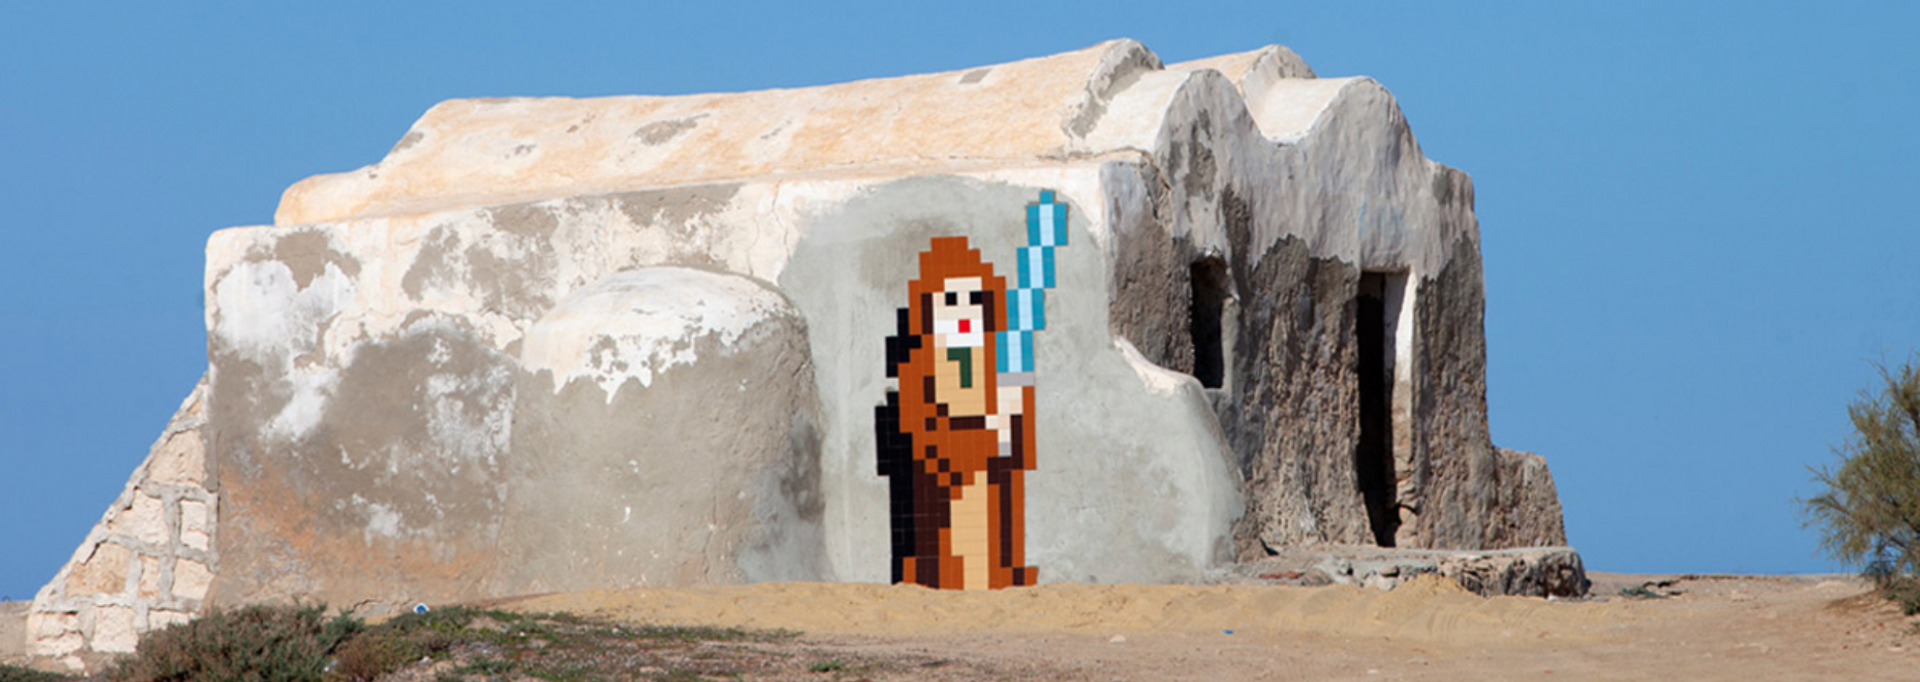 Obi-Wan Kenobi, Djerba by Invader